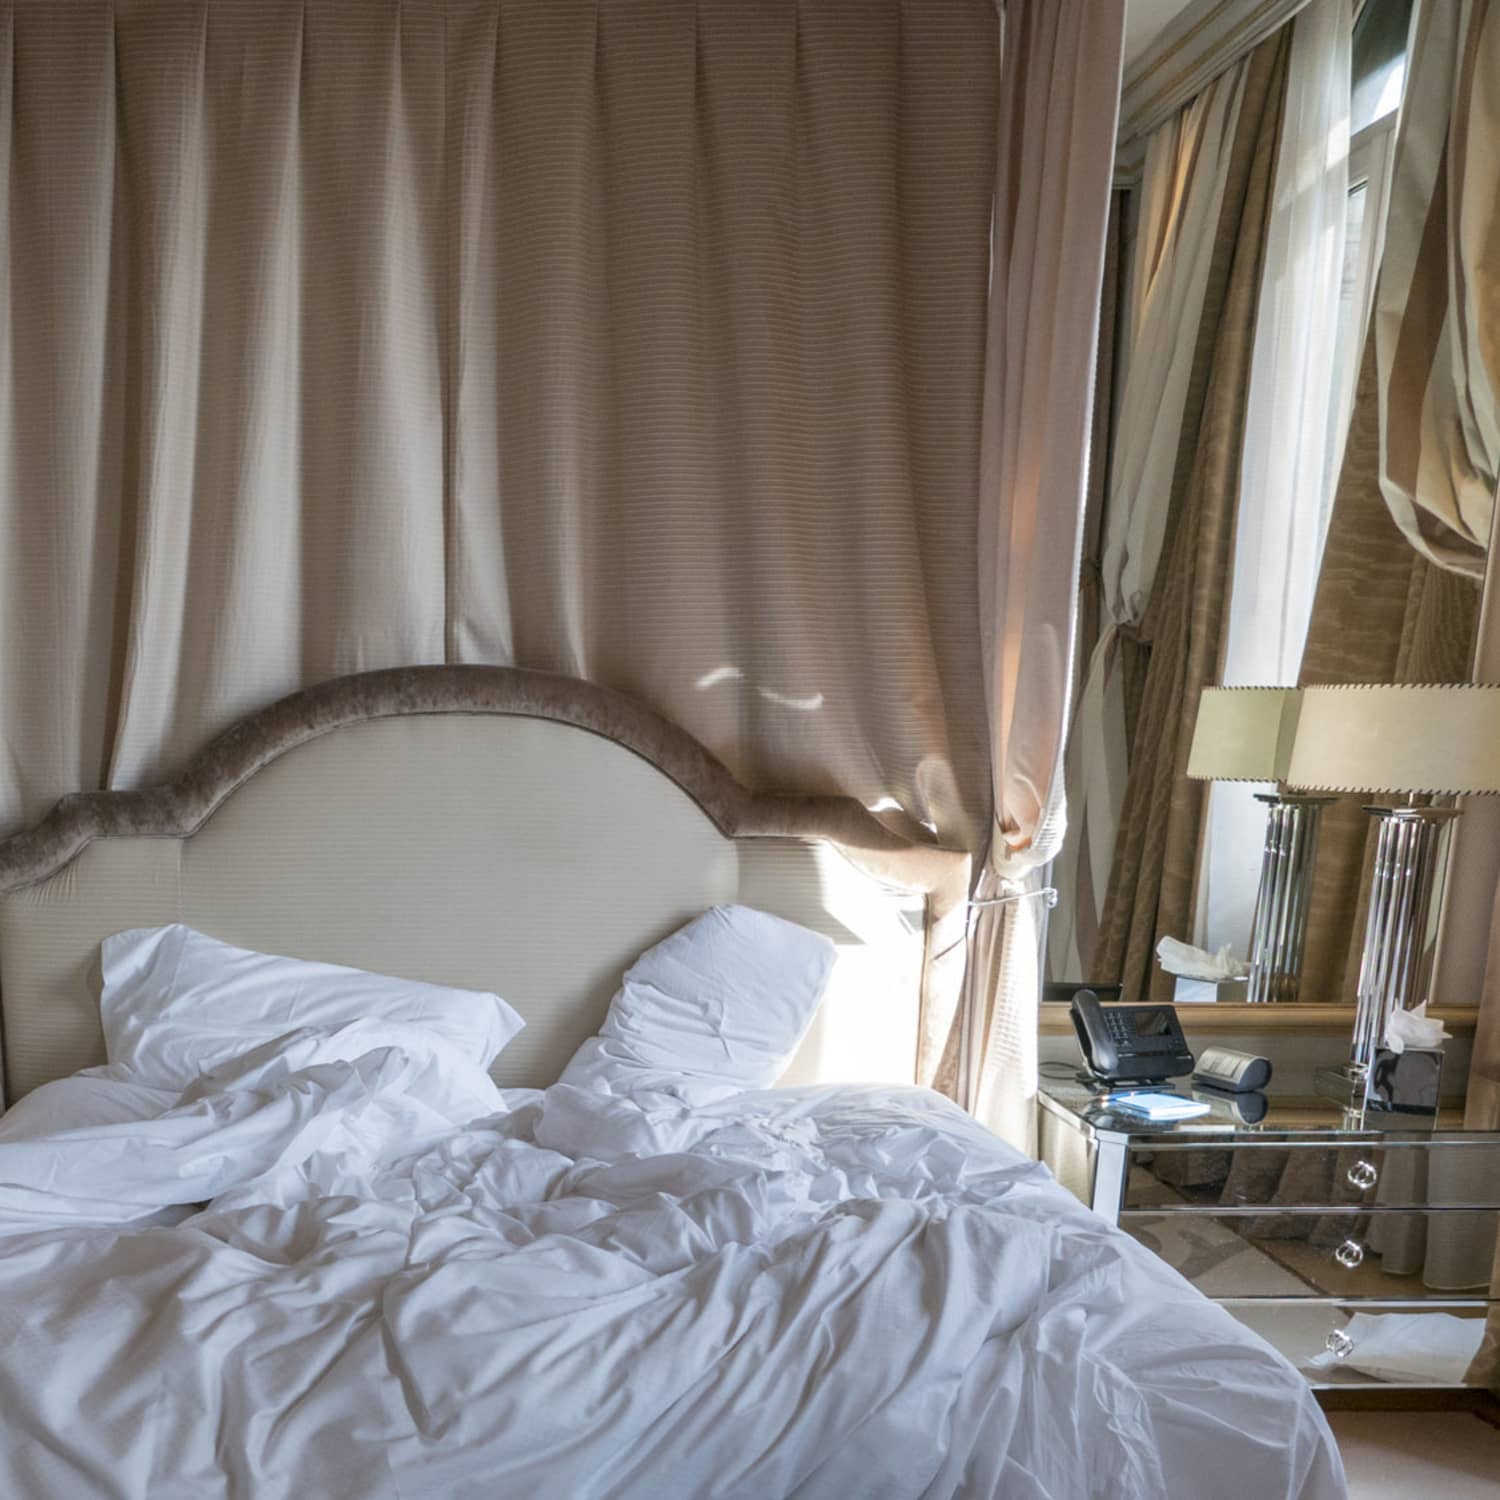 Messy Hotel Room Photo Series Left Behind Giulia Dini